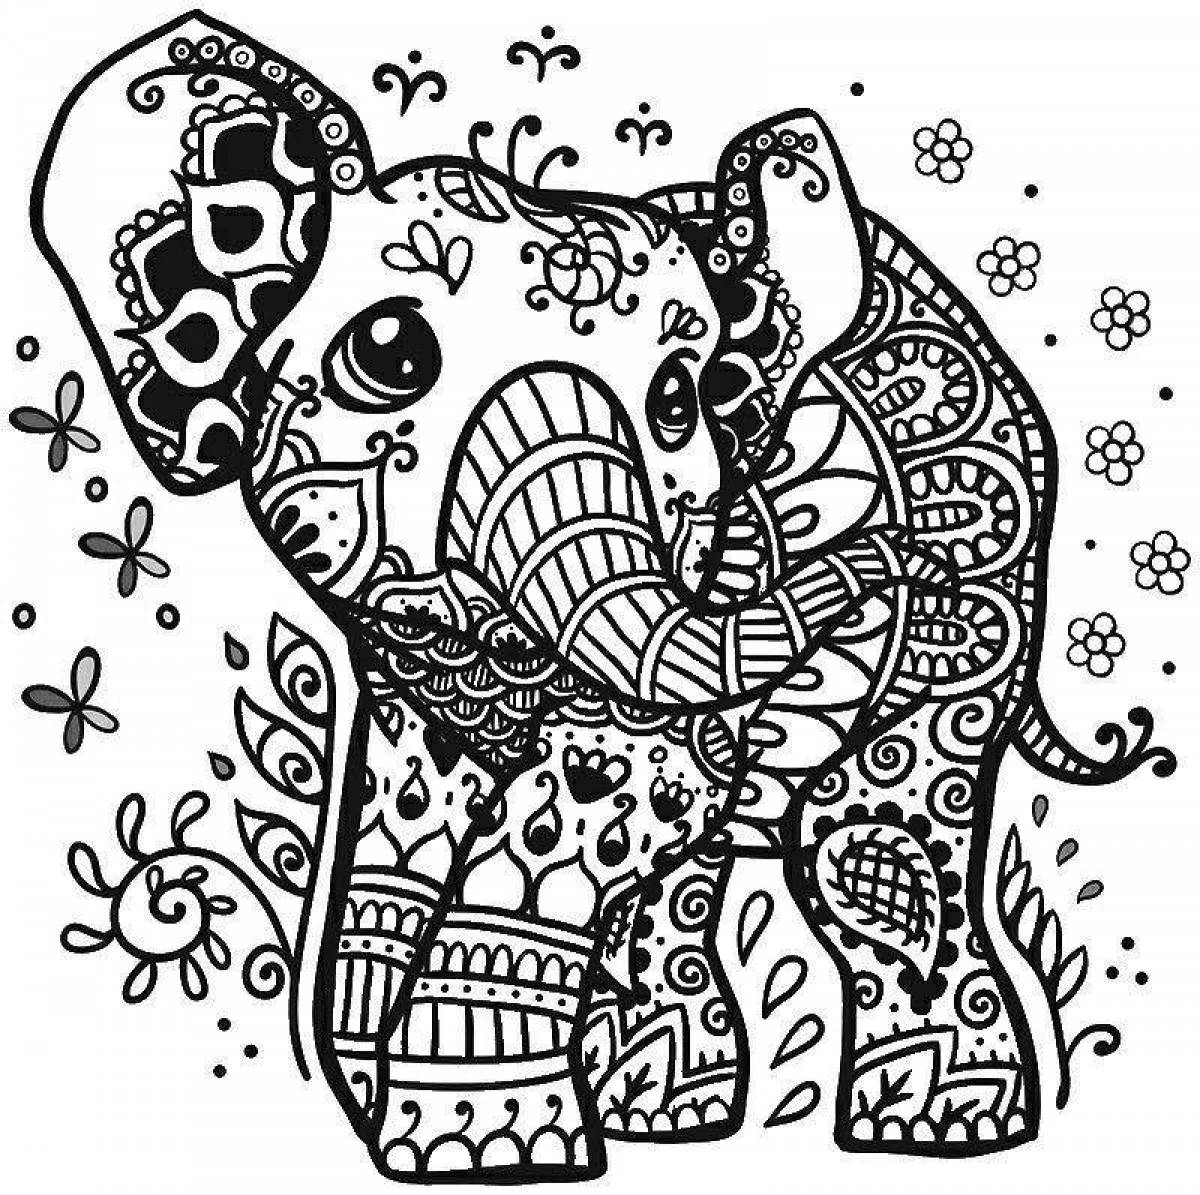 Serendipitous anti-stress elephant coloring book